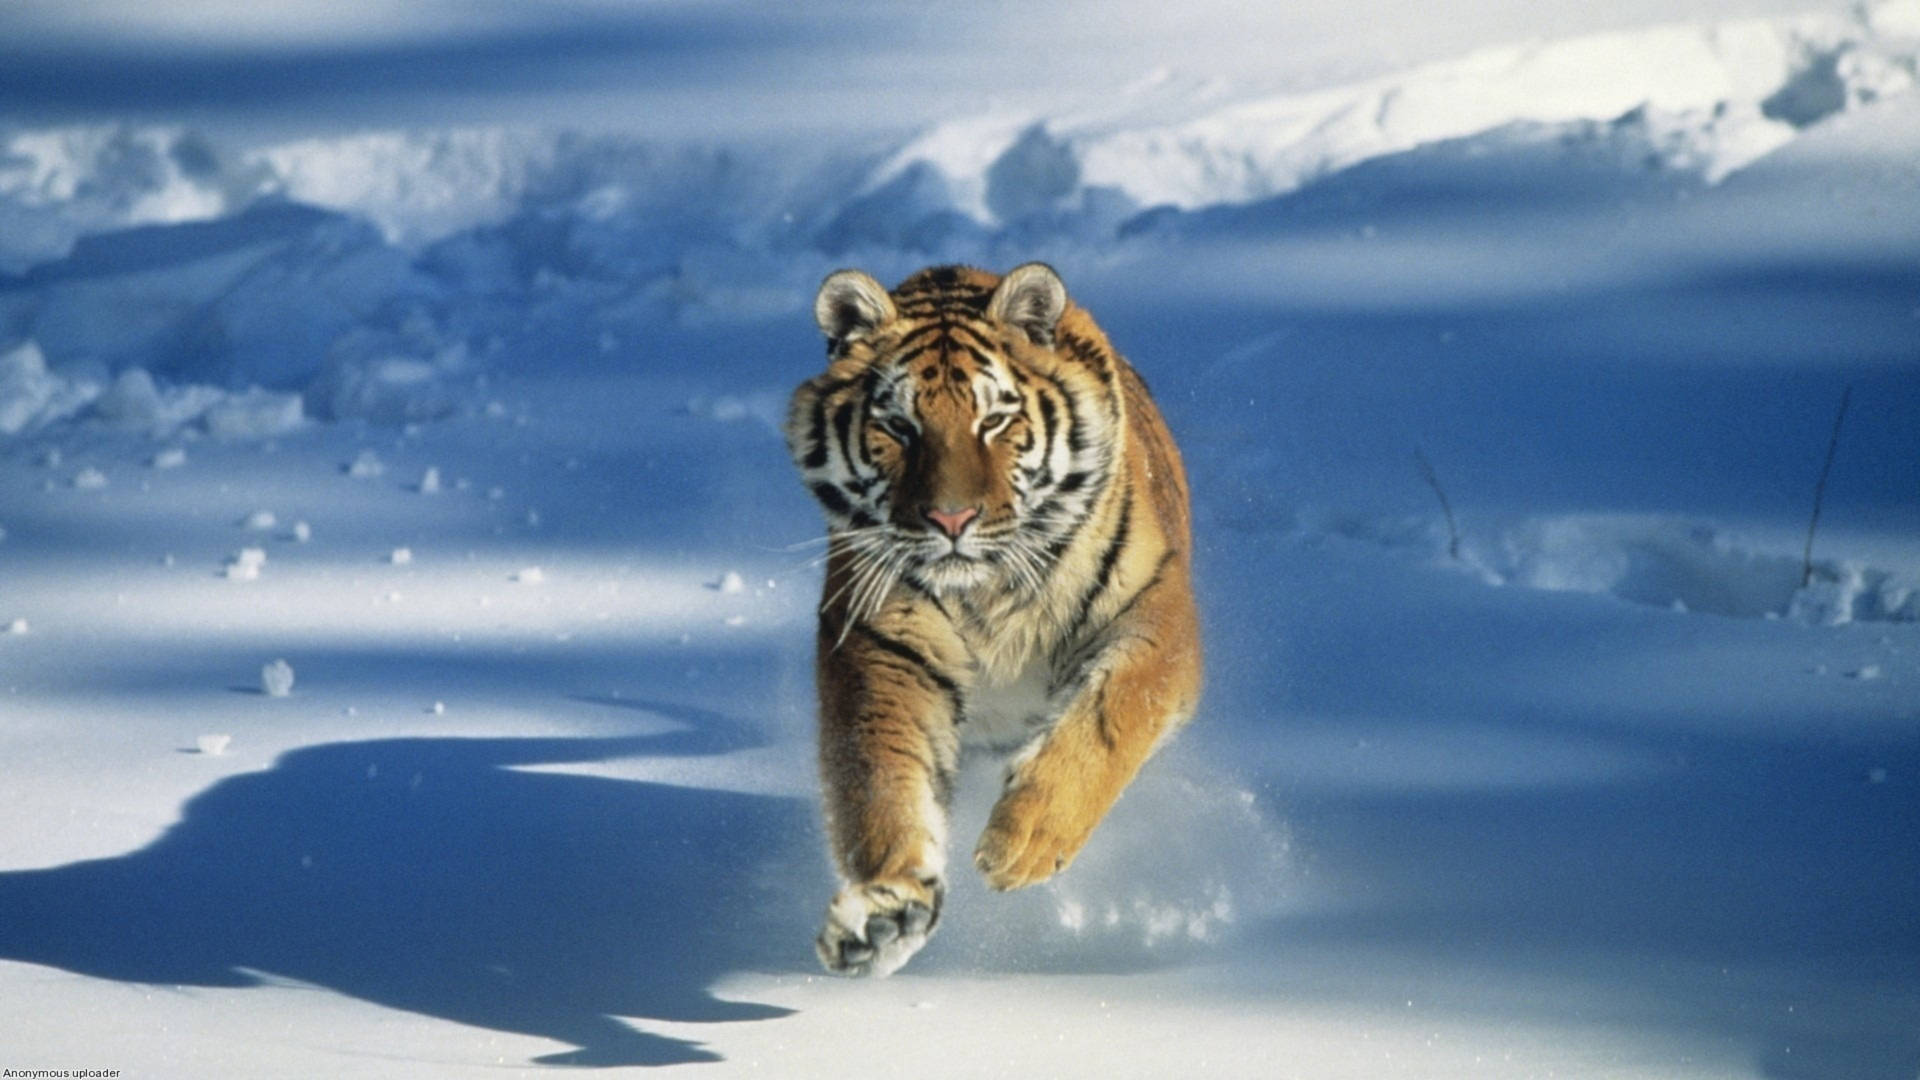 Tiger Running In Snow Background